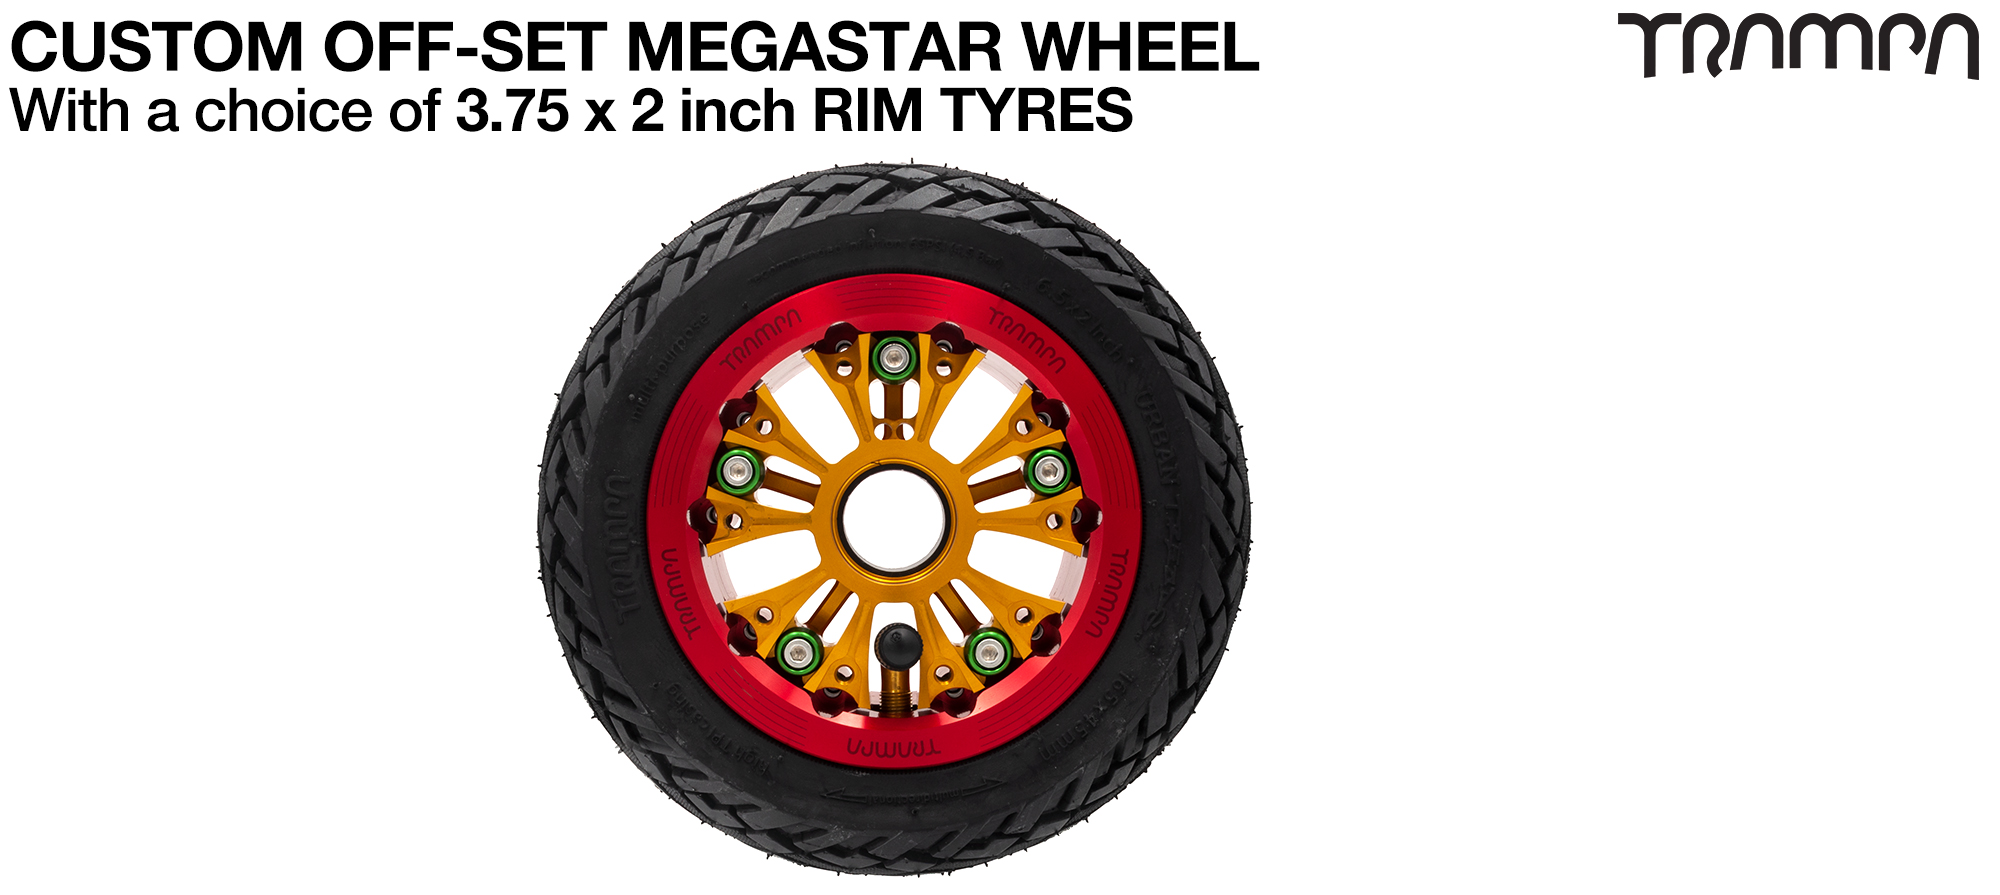 OFF-SET MEGASTAR 8 Wheel - 6 Inch URBAN Tyre (£75)